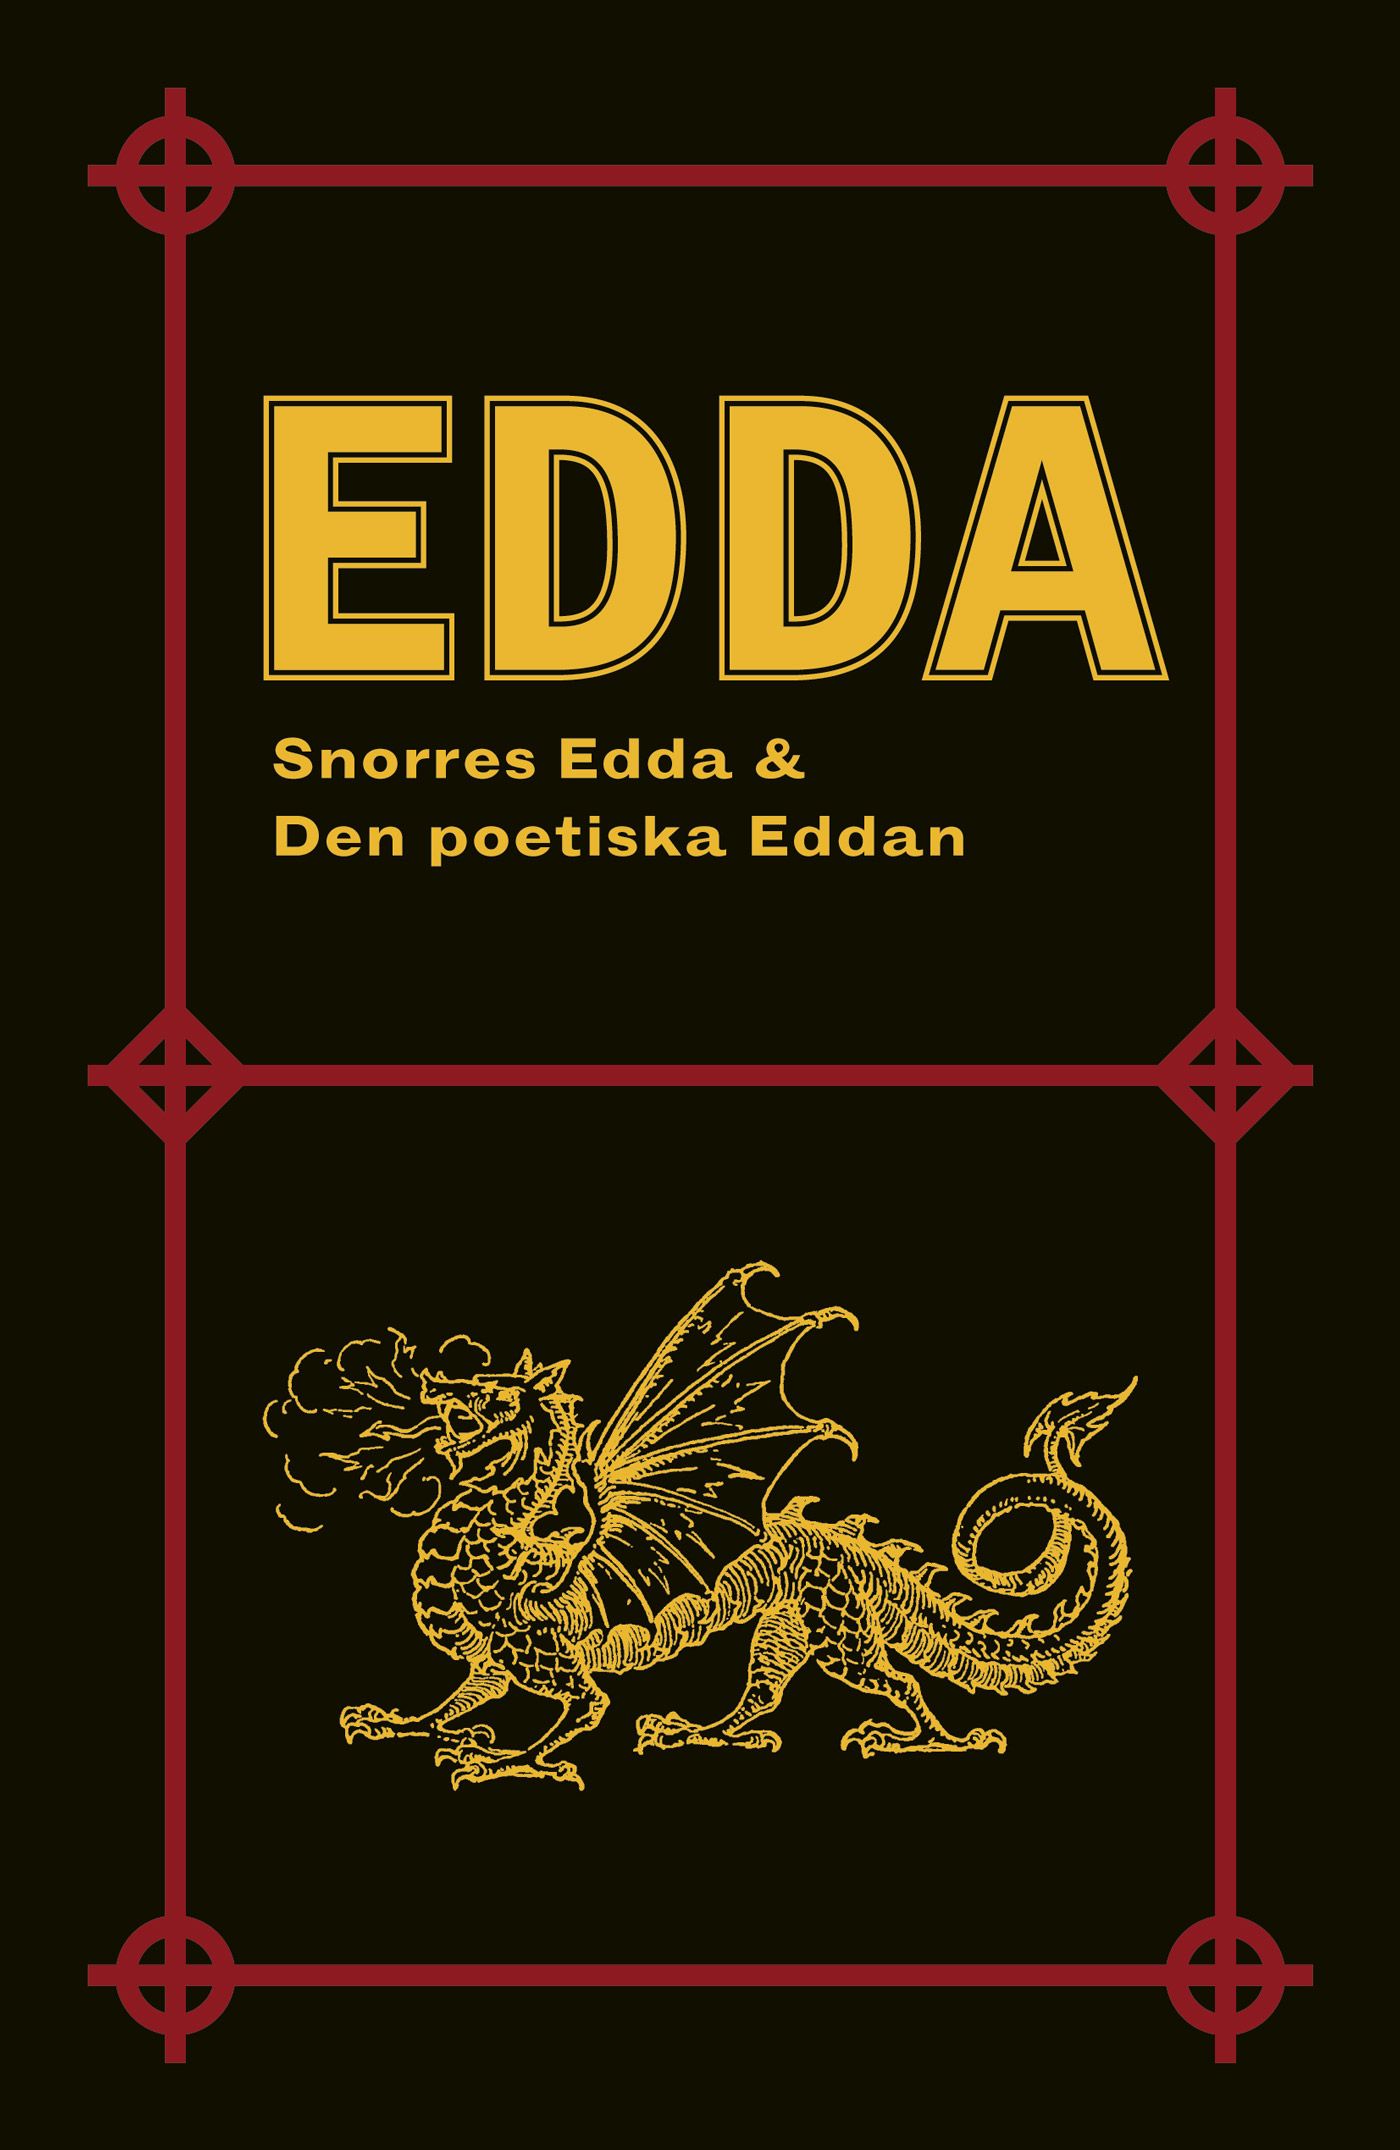 Edda: Snorres Edda & Den poetiska Eddan, eBook by Peter August Gödecke, Snorre Sturlasson